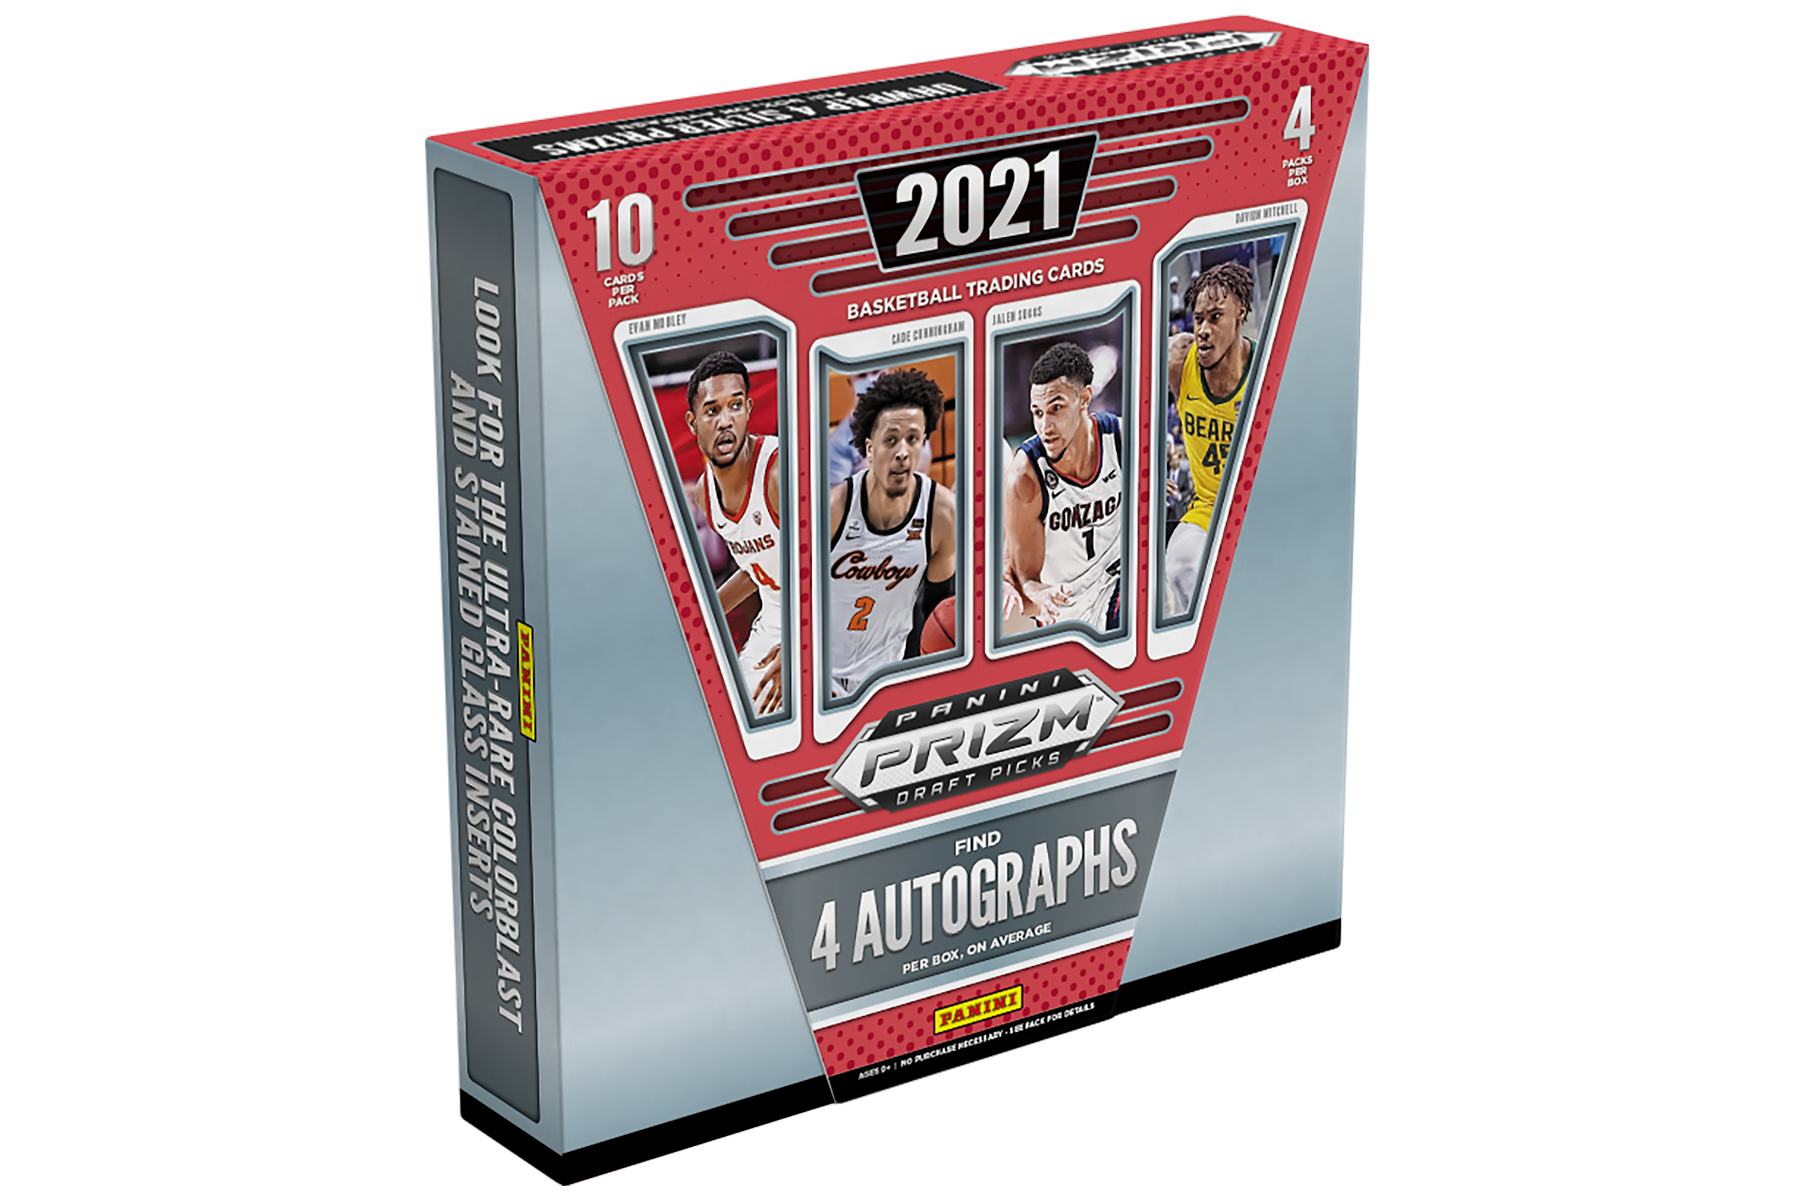 2023-24 Panini Prizm Draft Picks Basketball Checklist, Set Details